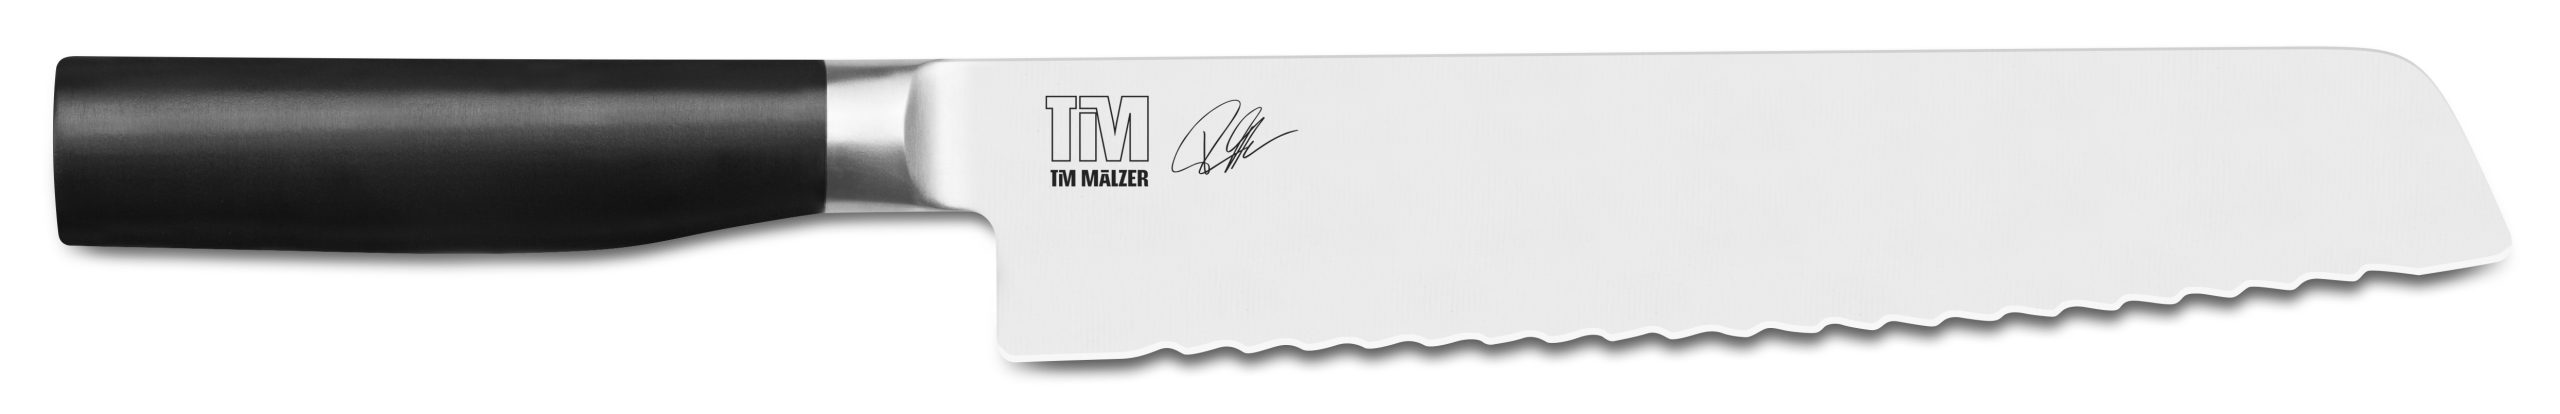 TMK-0705 KAMAGATA TimMalzer Bread Knife 23CM KAI JAPAN